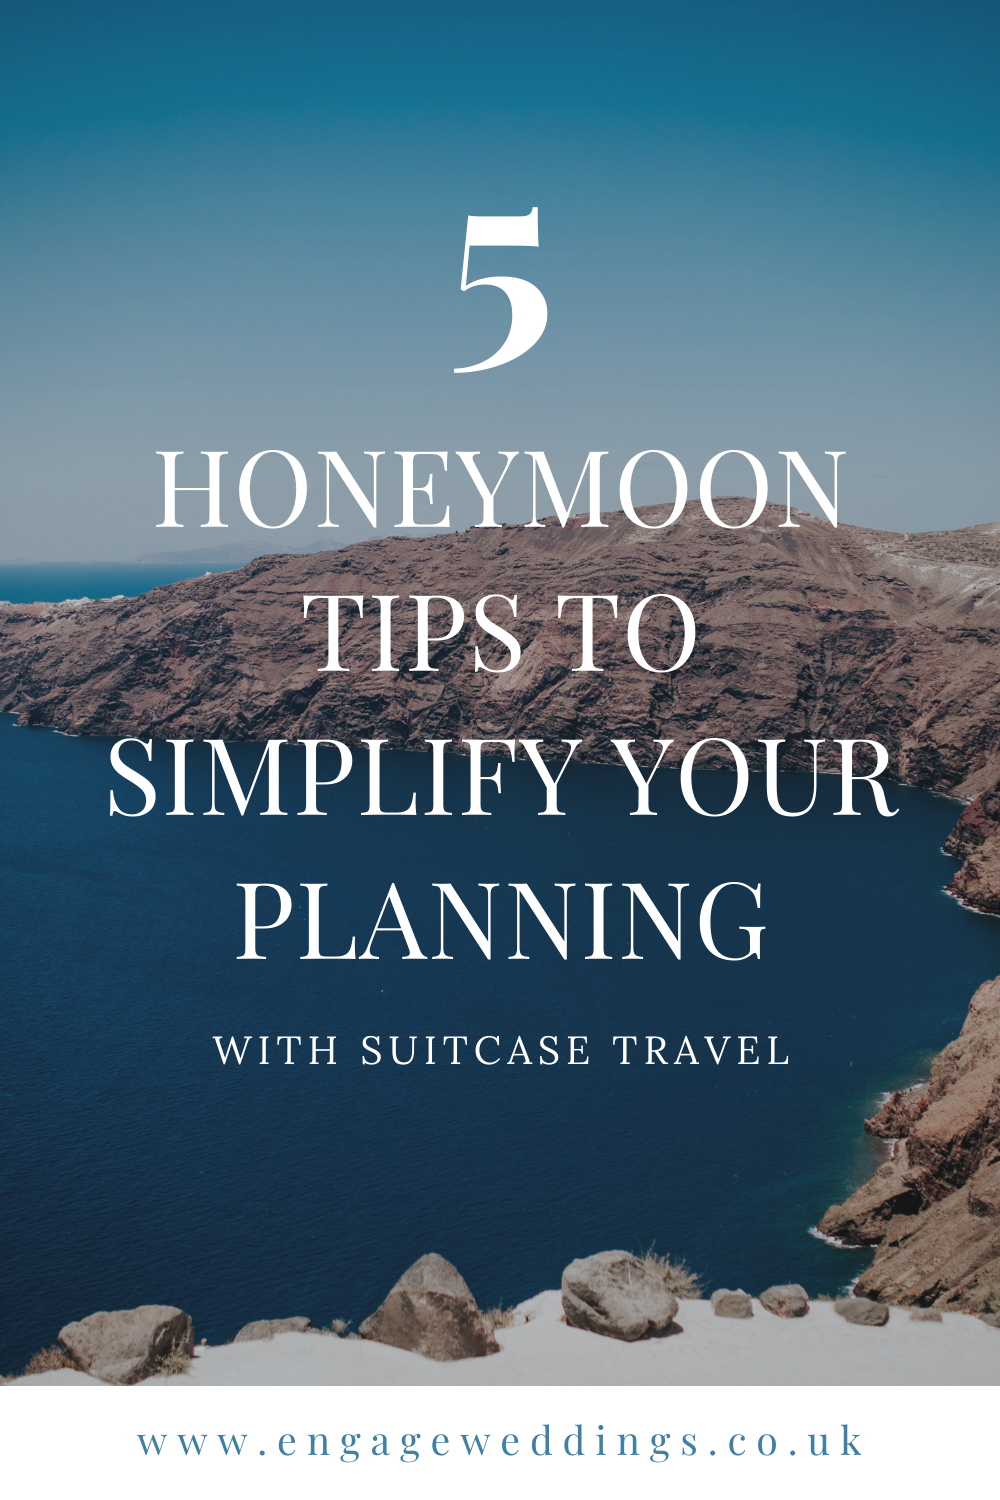 5 Honeymoon Tips to simplify your planning_engageweddings.co.uk.png